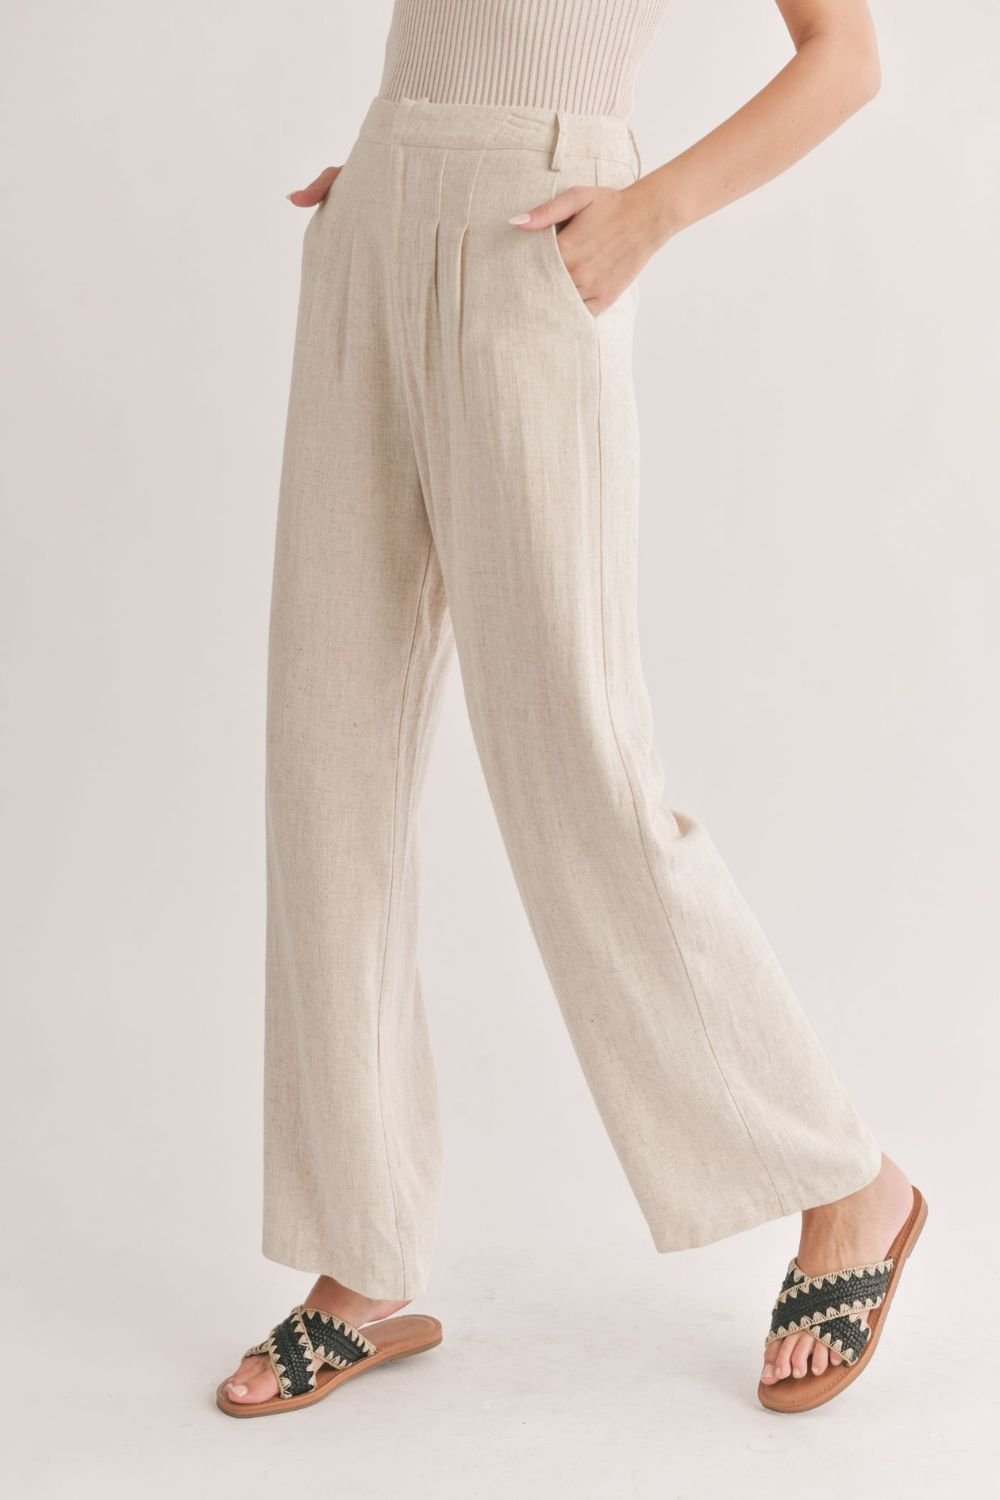 Women's Linen Blend Pleated Trouser Pants | Oatmeal - Women's Pants - Blooming Daily